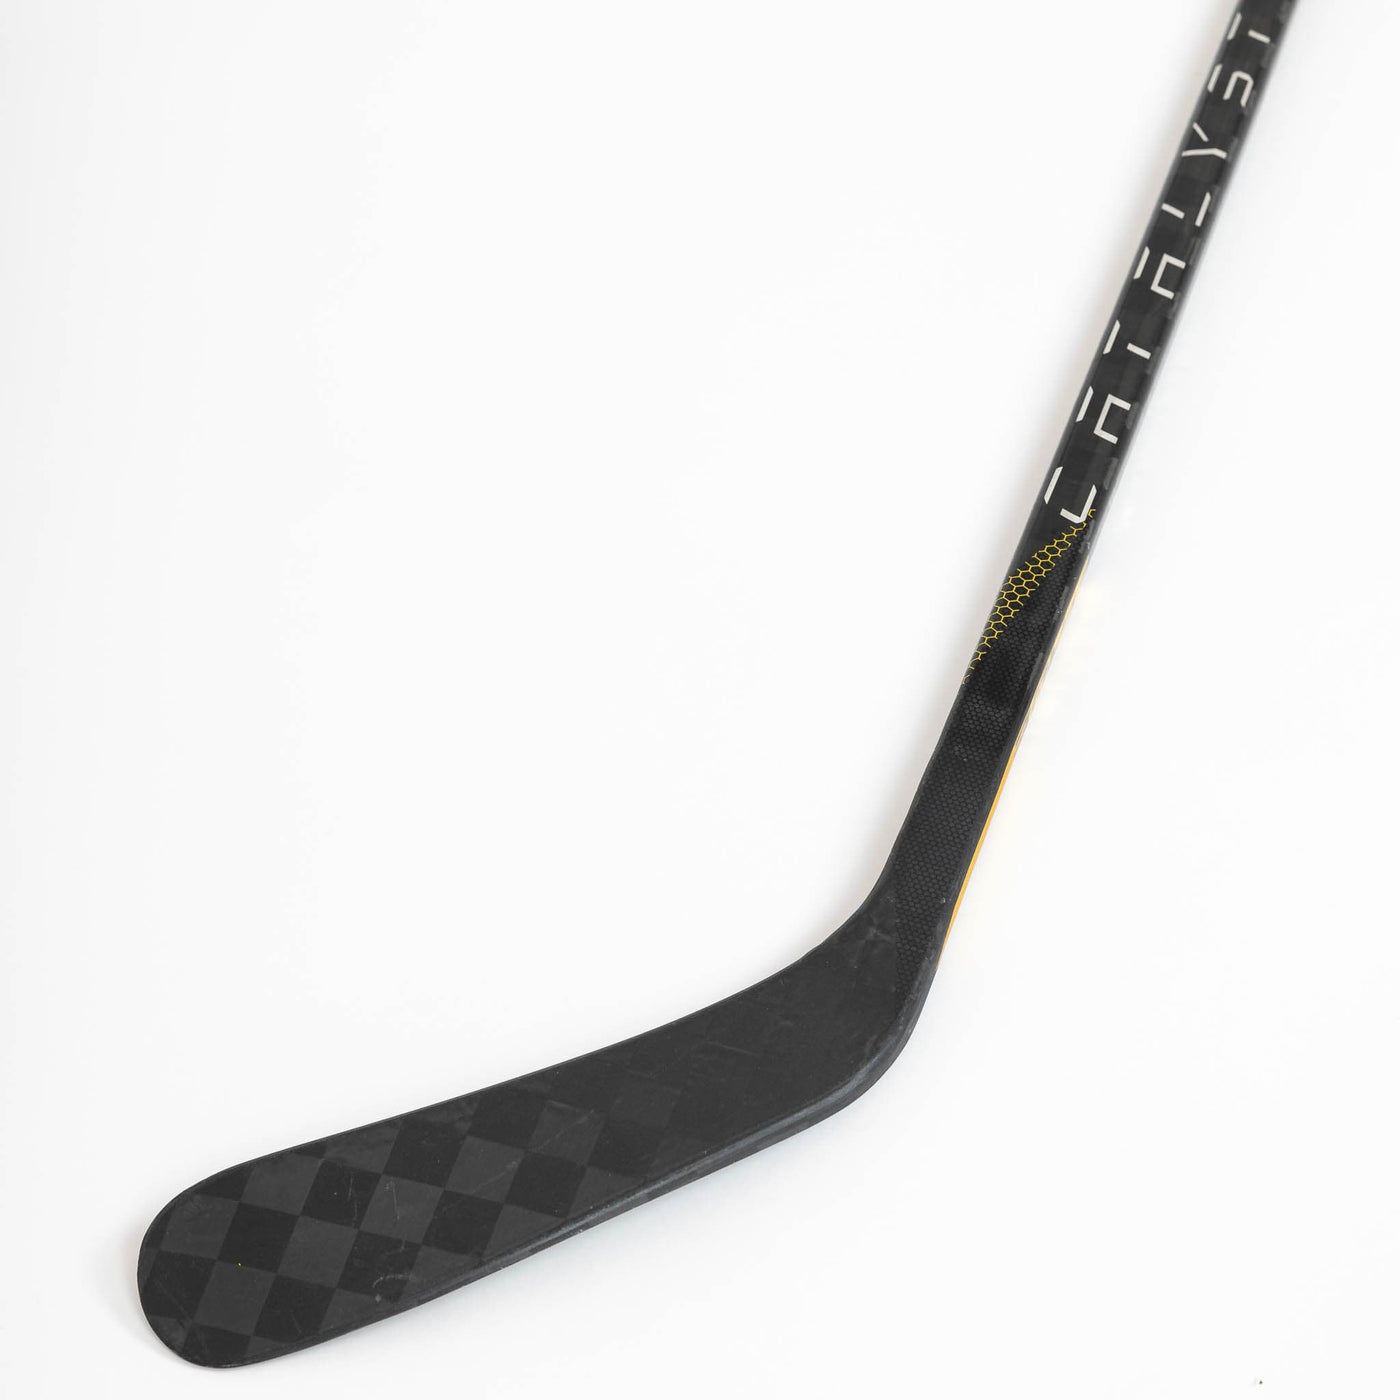 TRUE Catalyst PX Junior Hockey Stick - 40 Flex